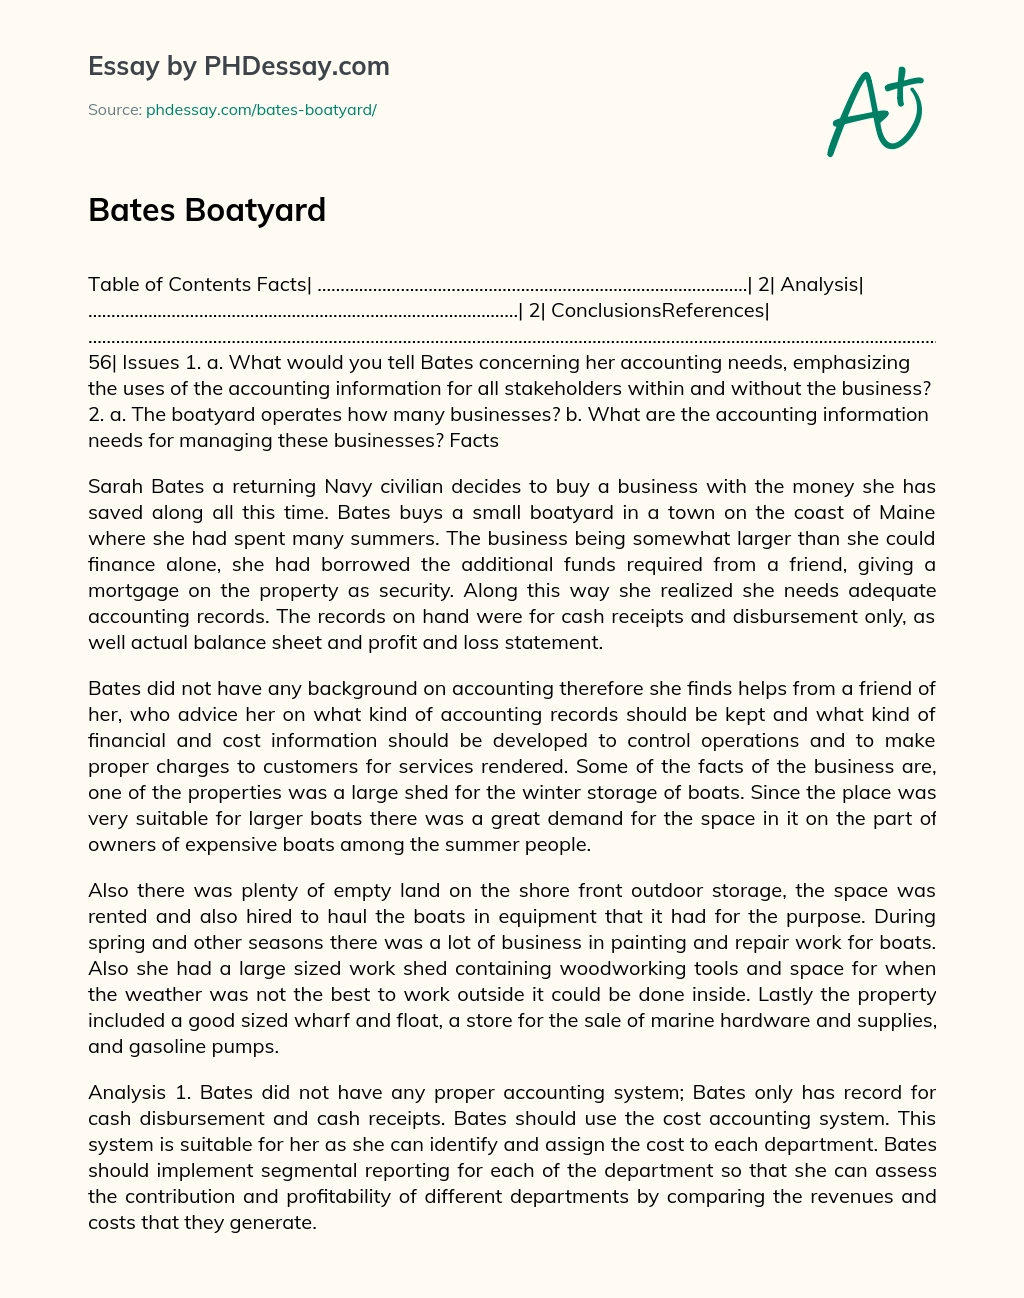 Bates Boatyard essay